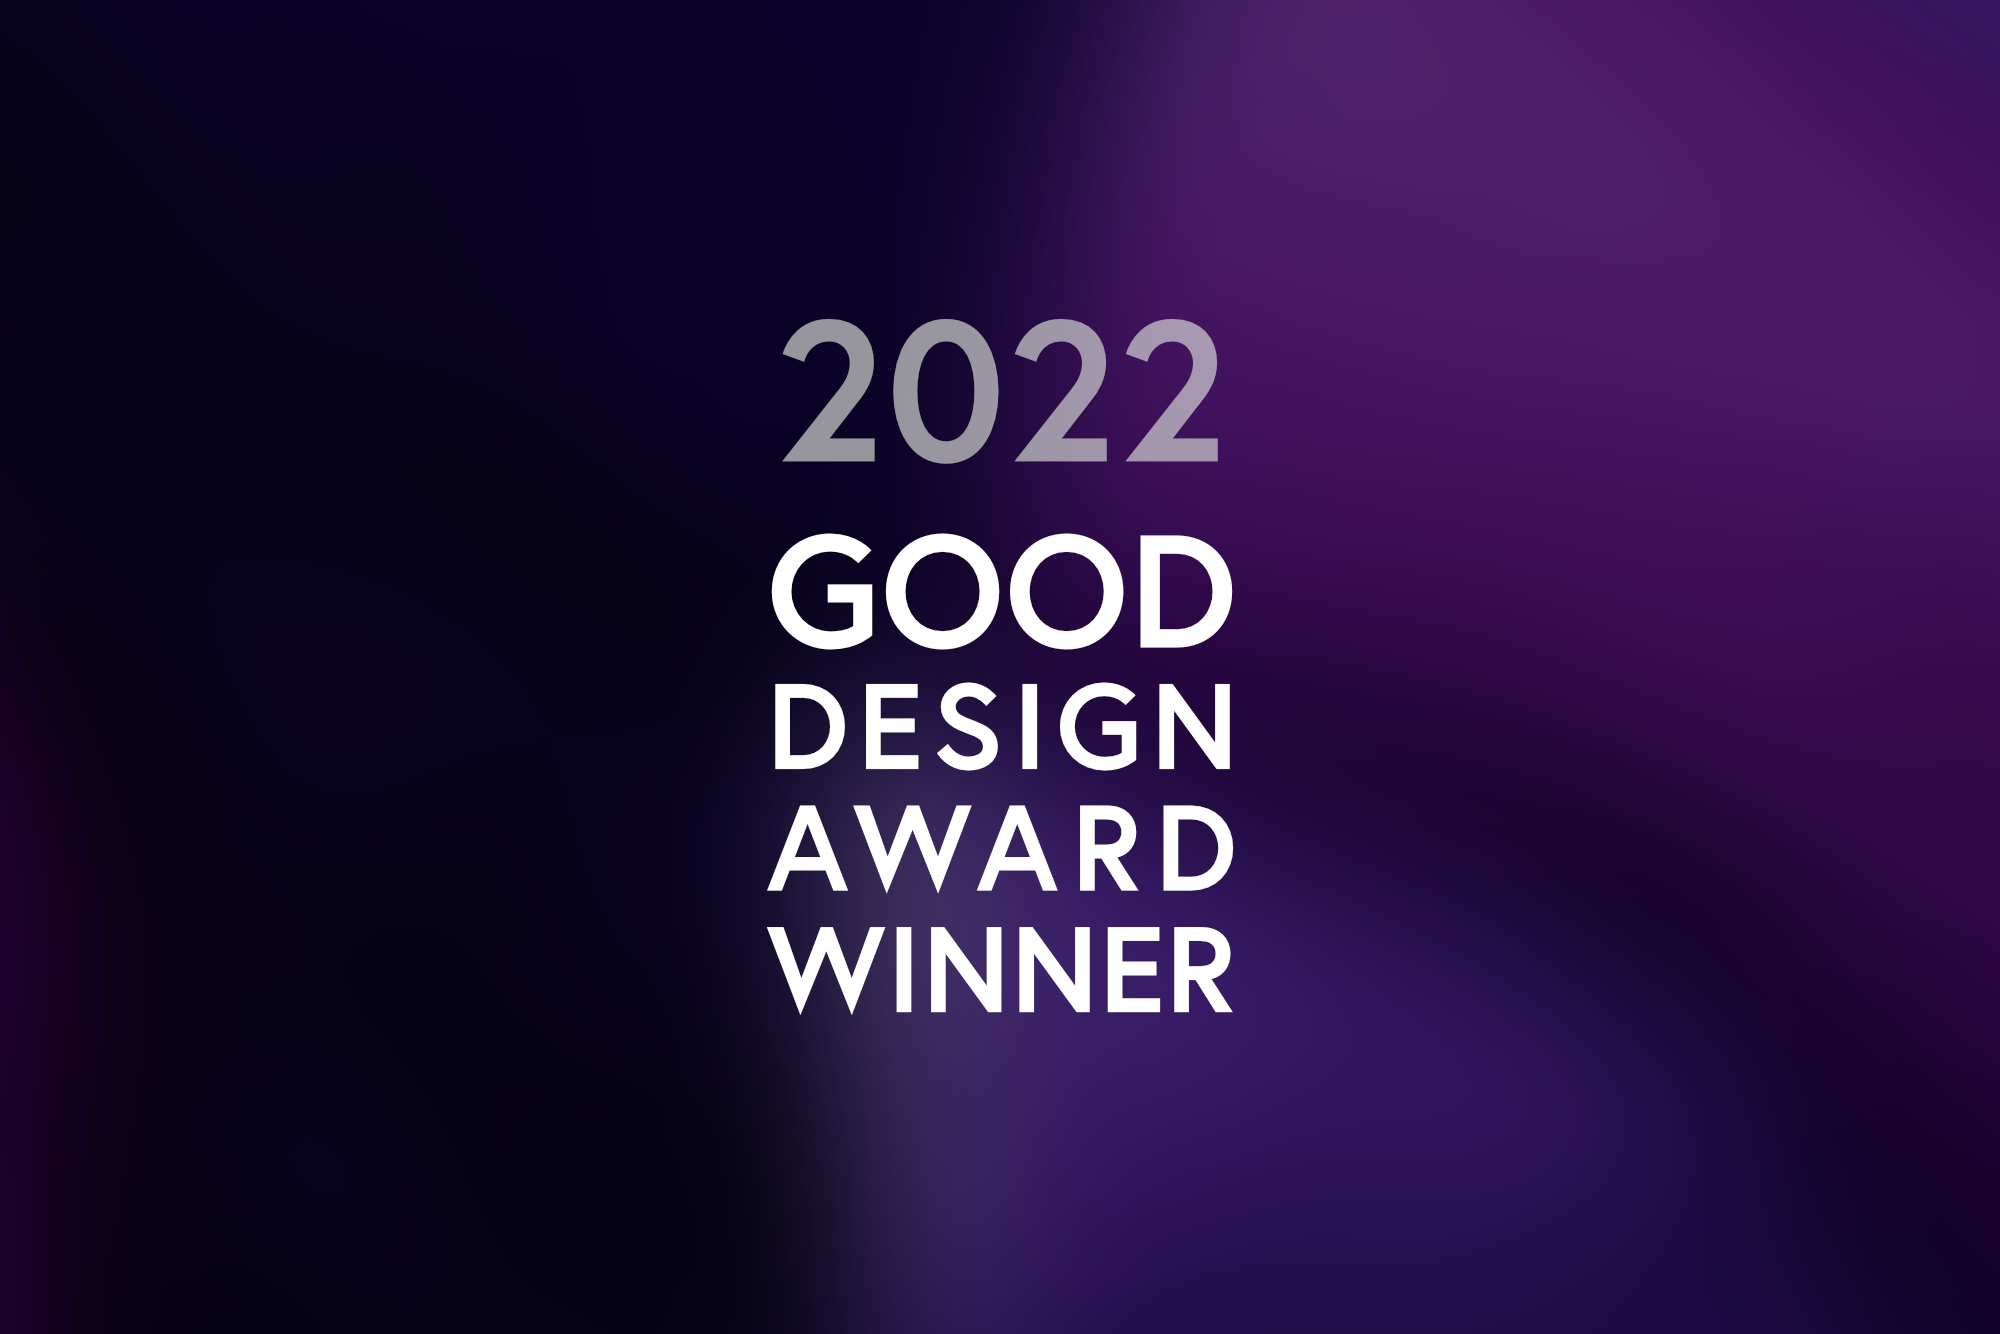 Adient good design award winner 2022